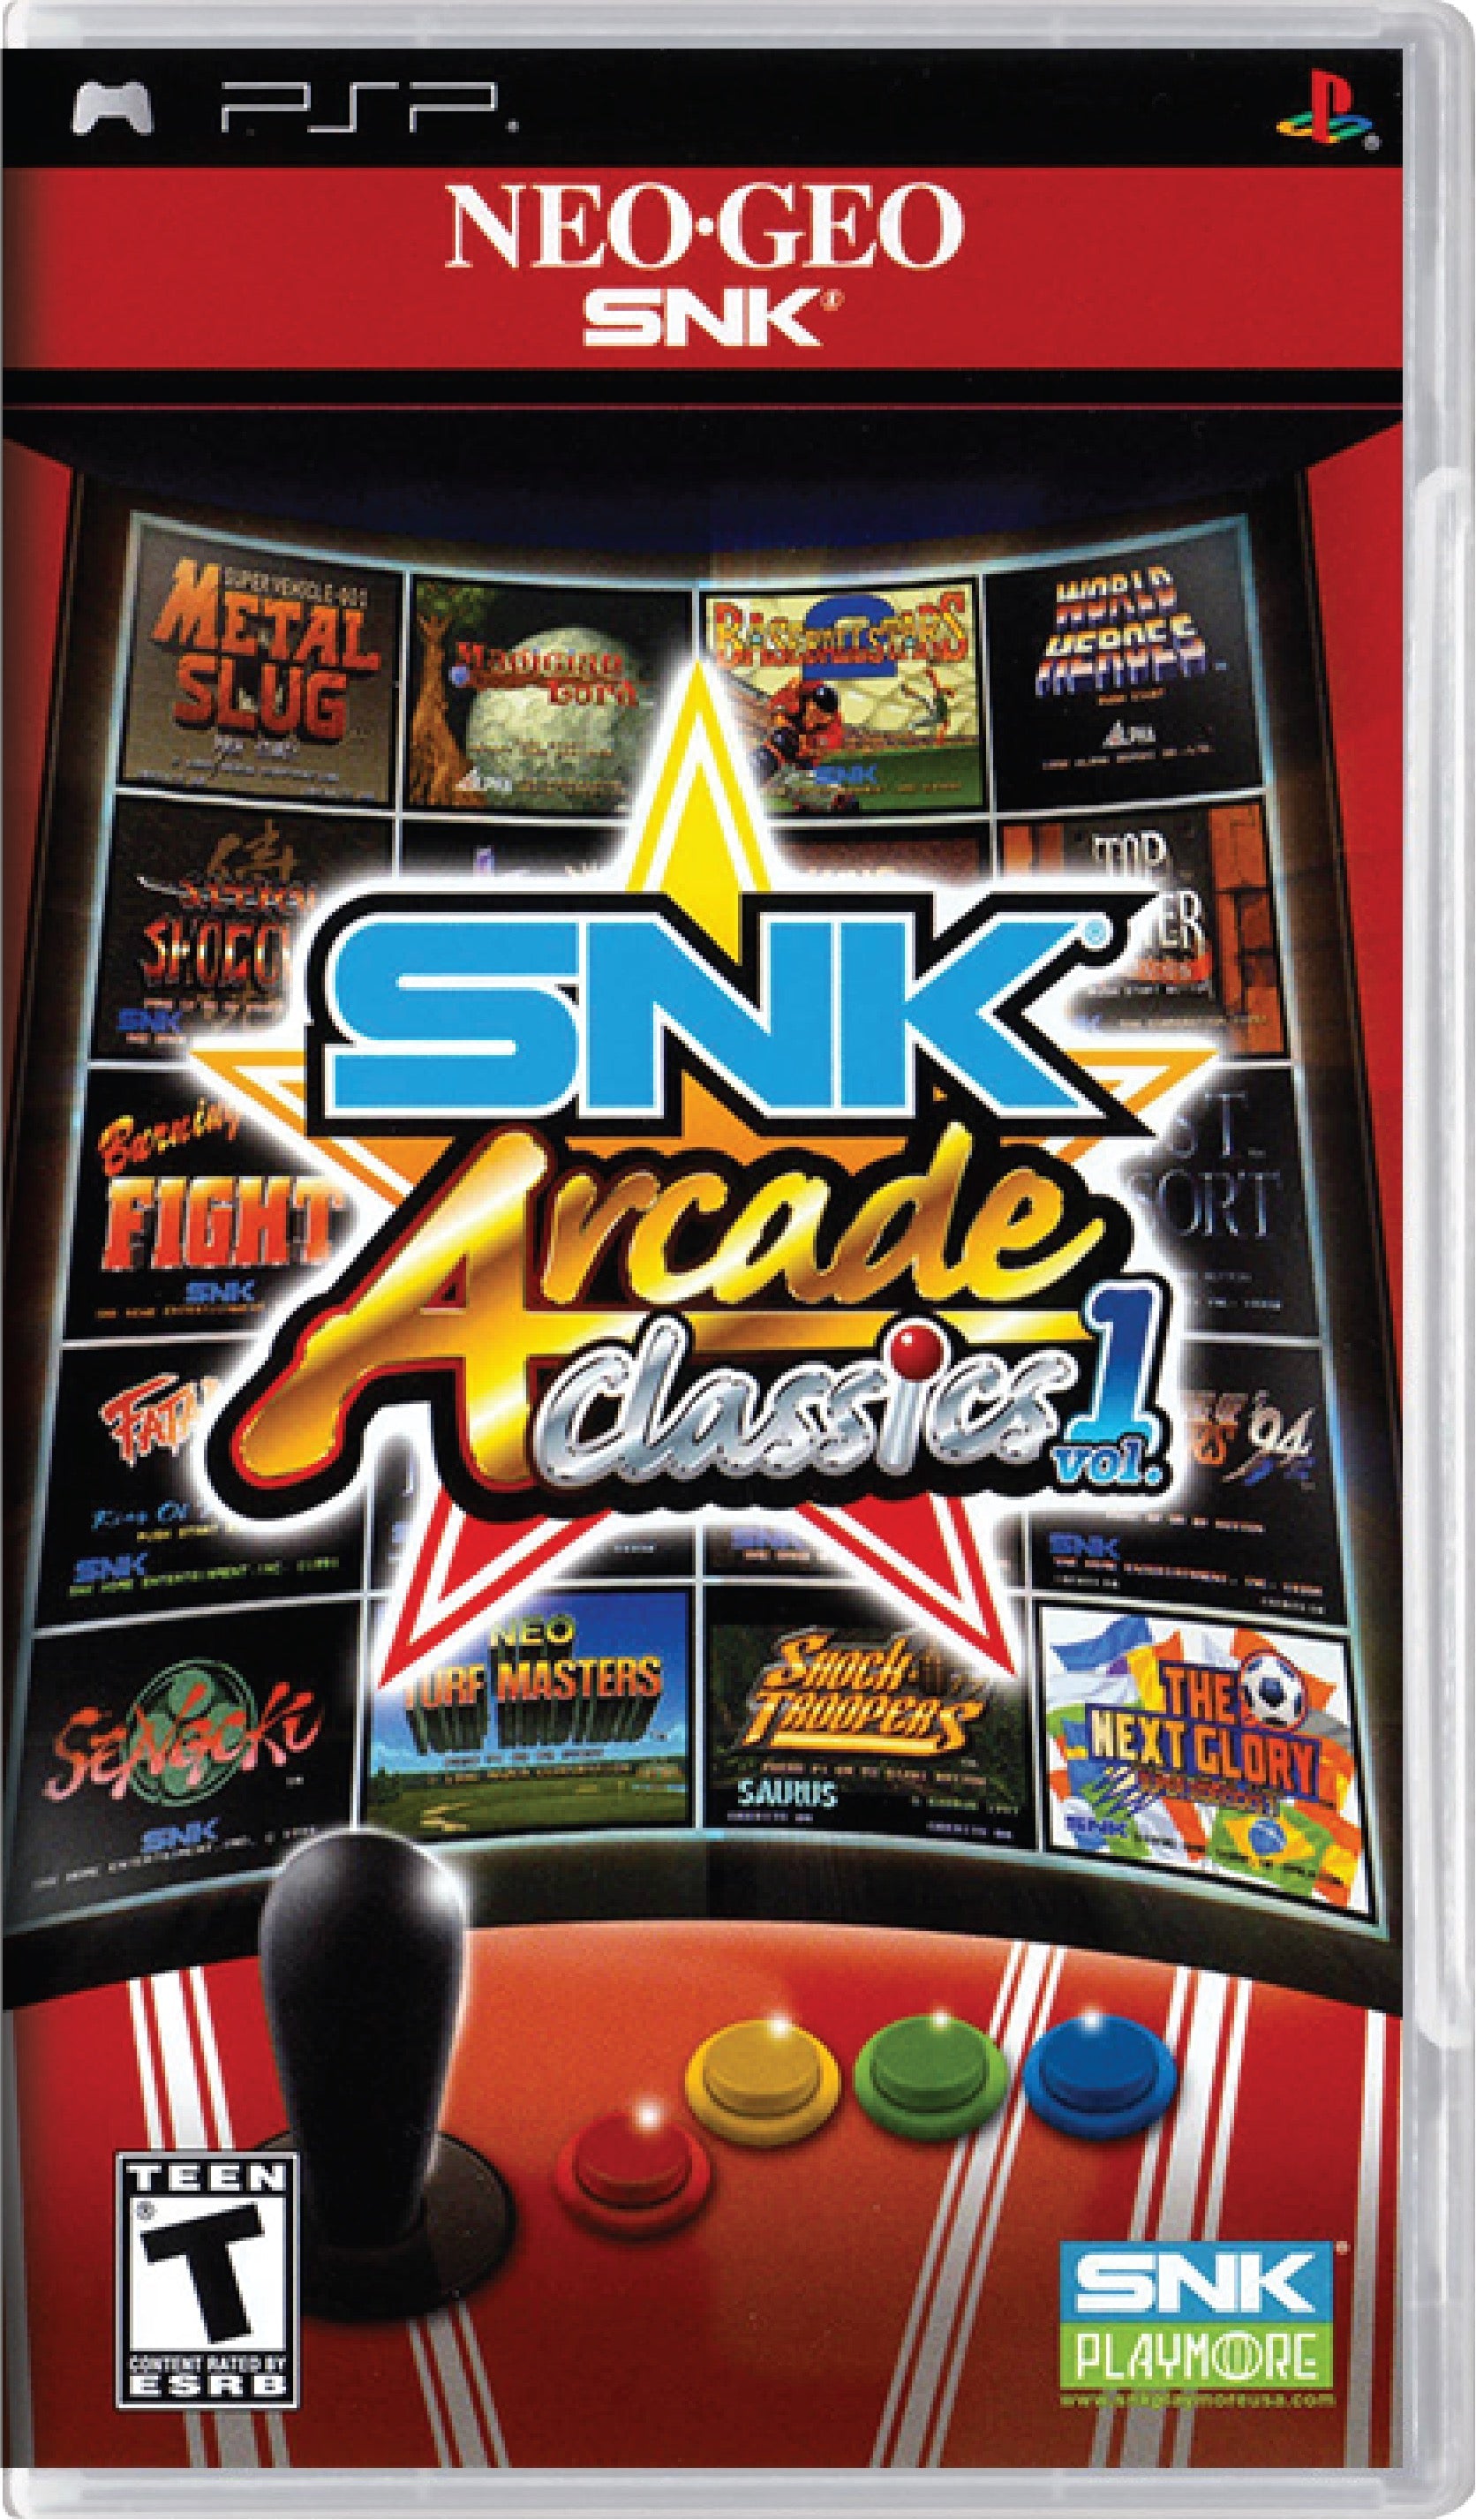 SNK Arcade Classics Volume 1 Cover Art